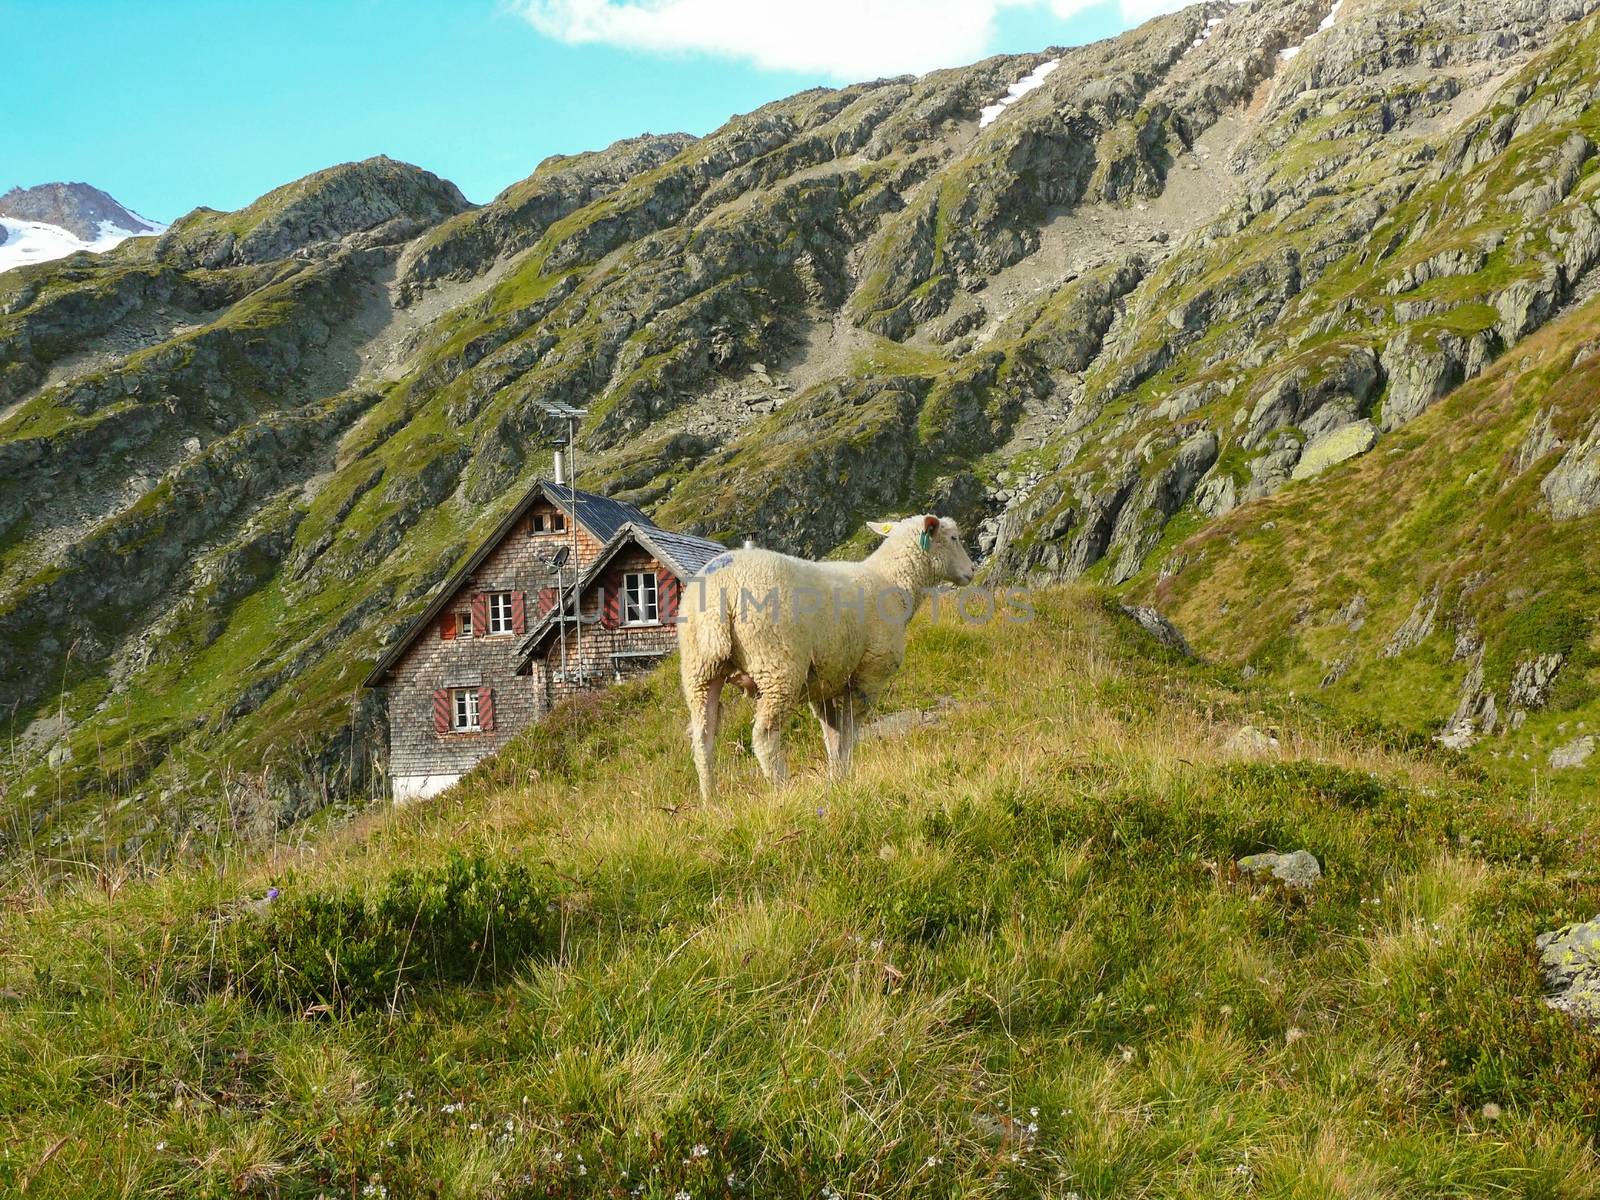 Sheep on alpine glacier mountain and gauli house on the Alpine glacier mountains in switzerland